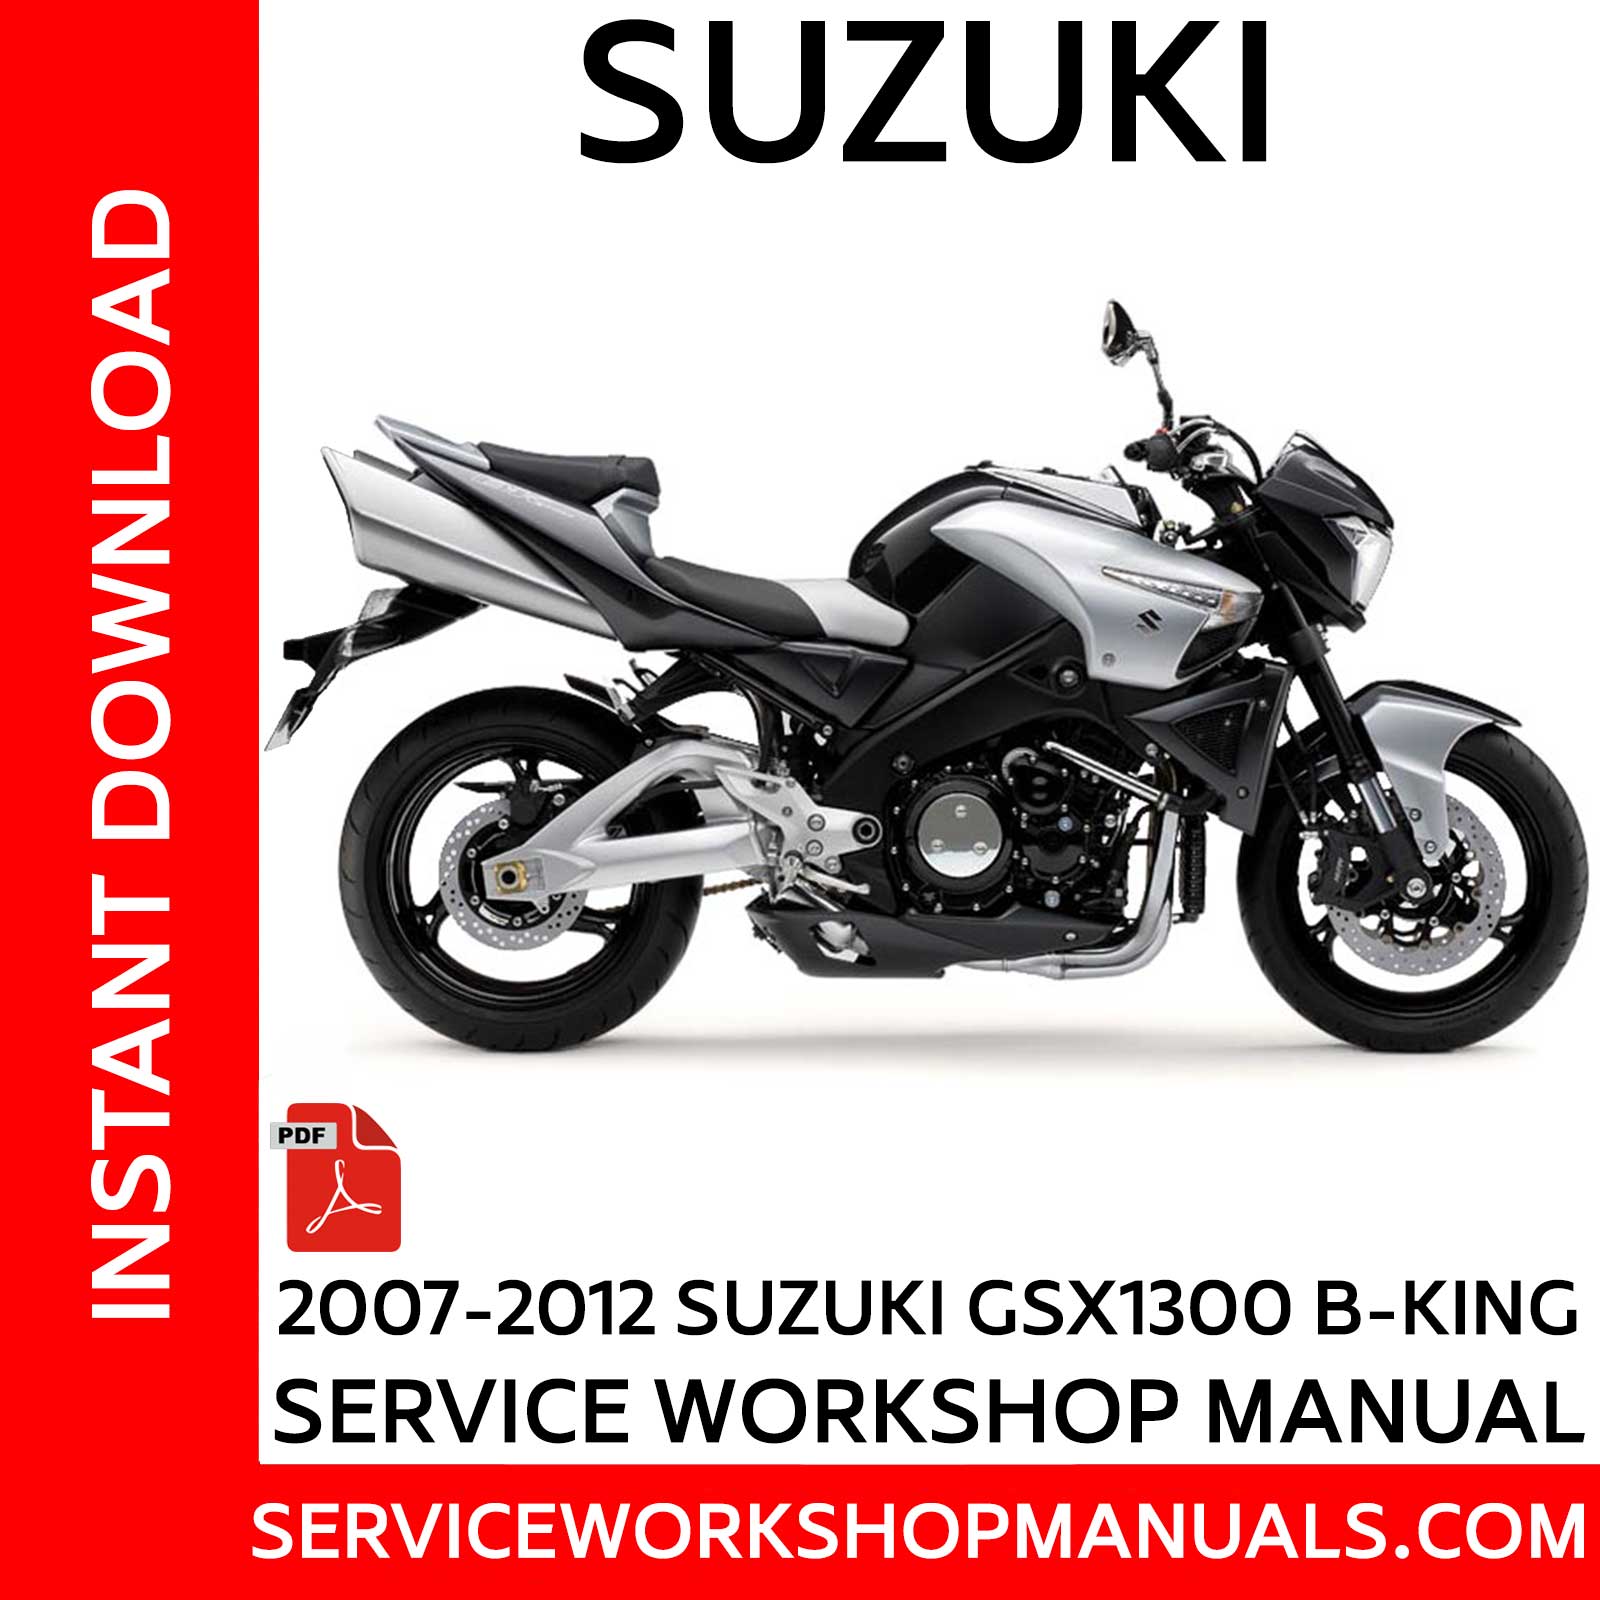 Suzuki GSX 1300 B-King 2007-2012 Service Workshop Manual ...